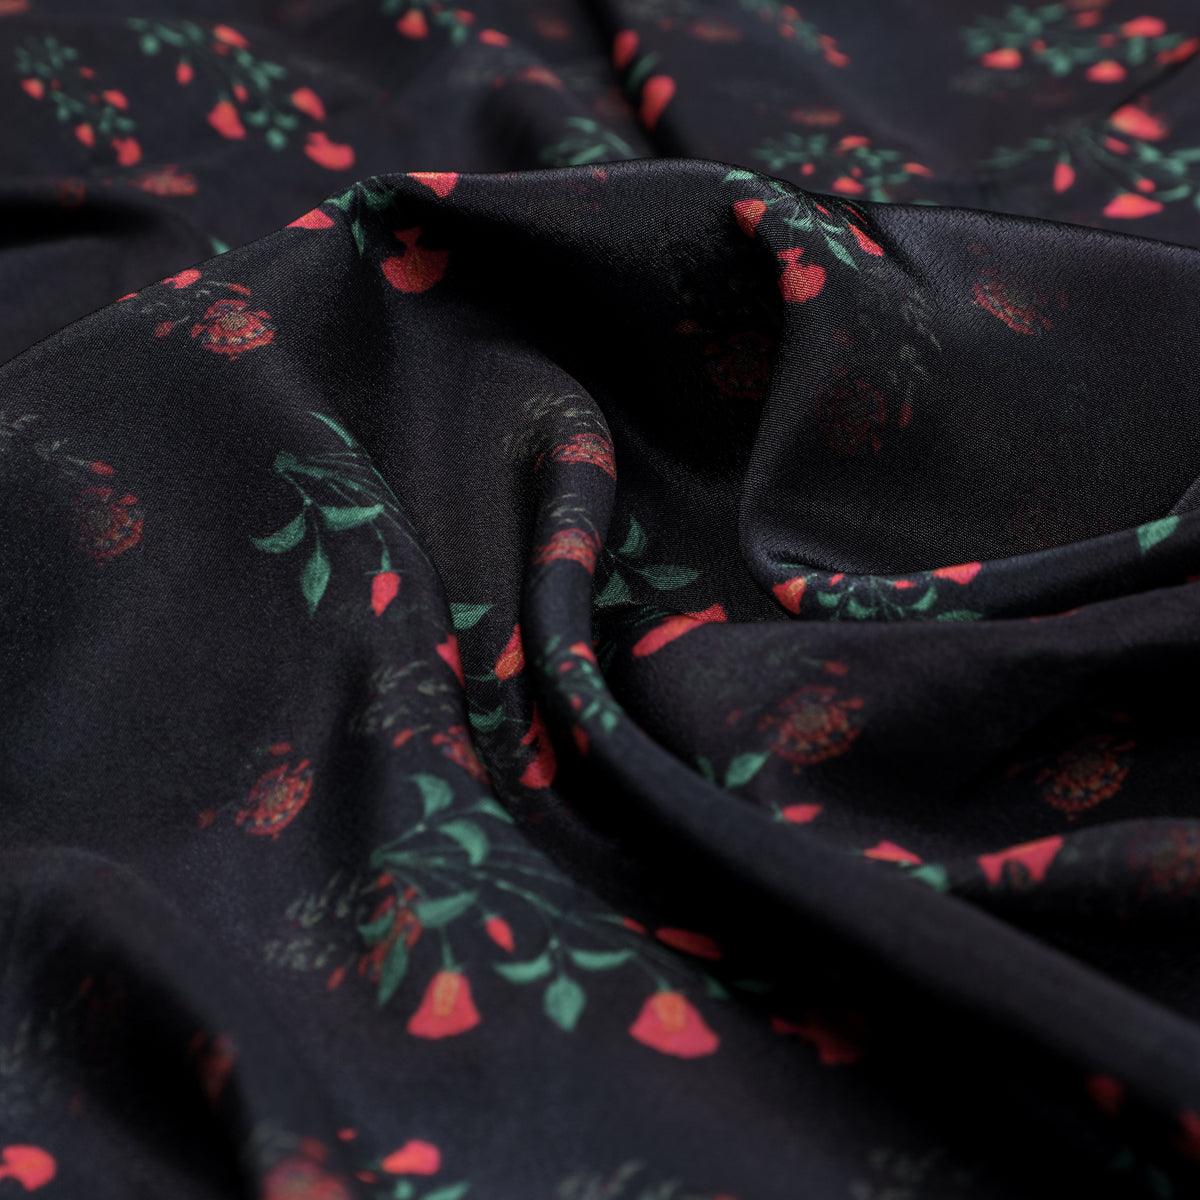 Red Flower over Black Base Digital Printed Fabric - FAB VOGUE Studio®